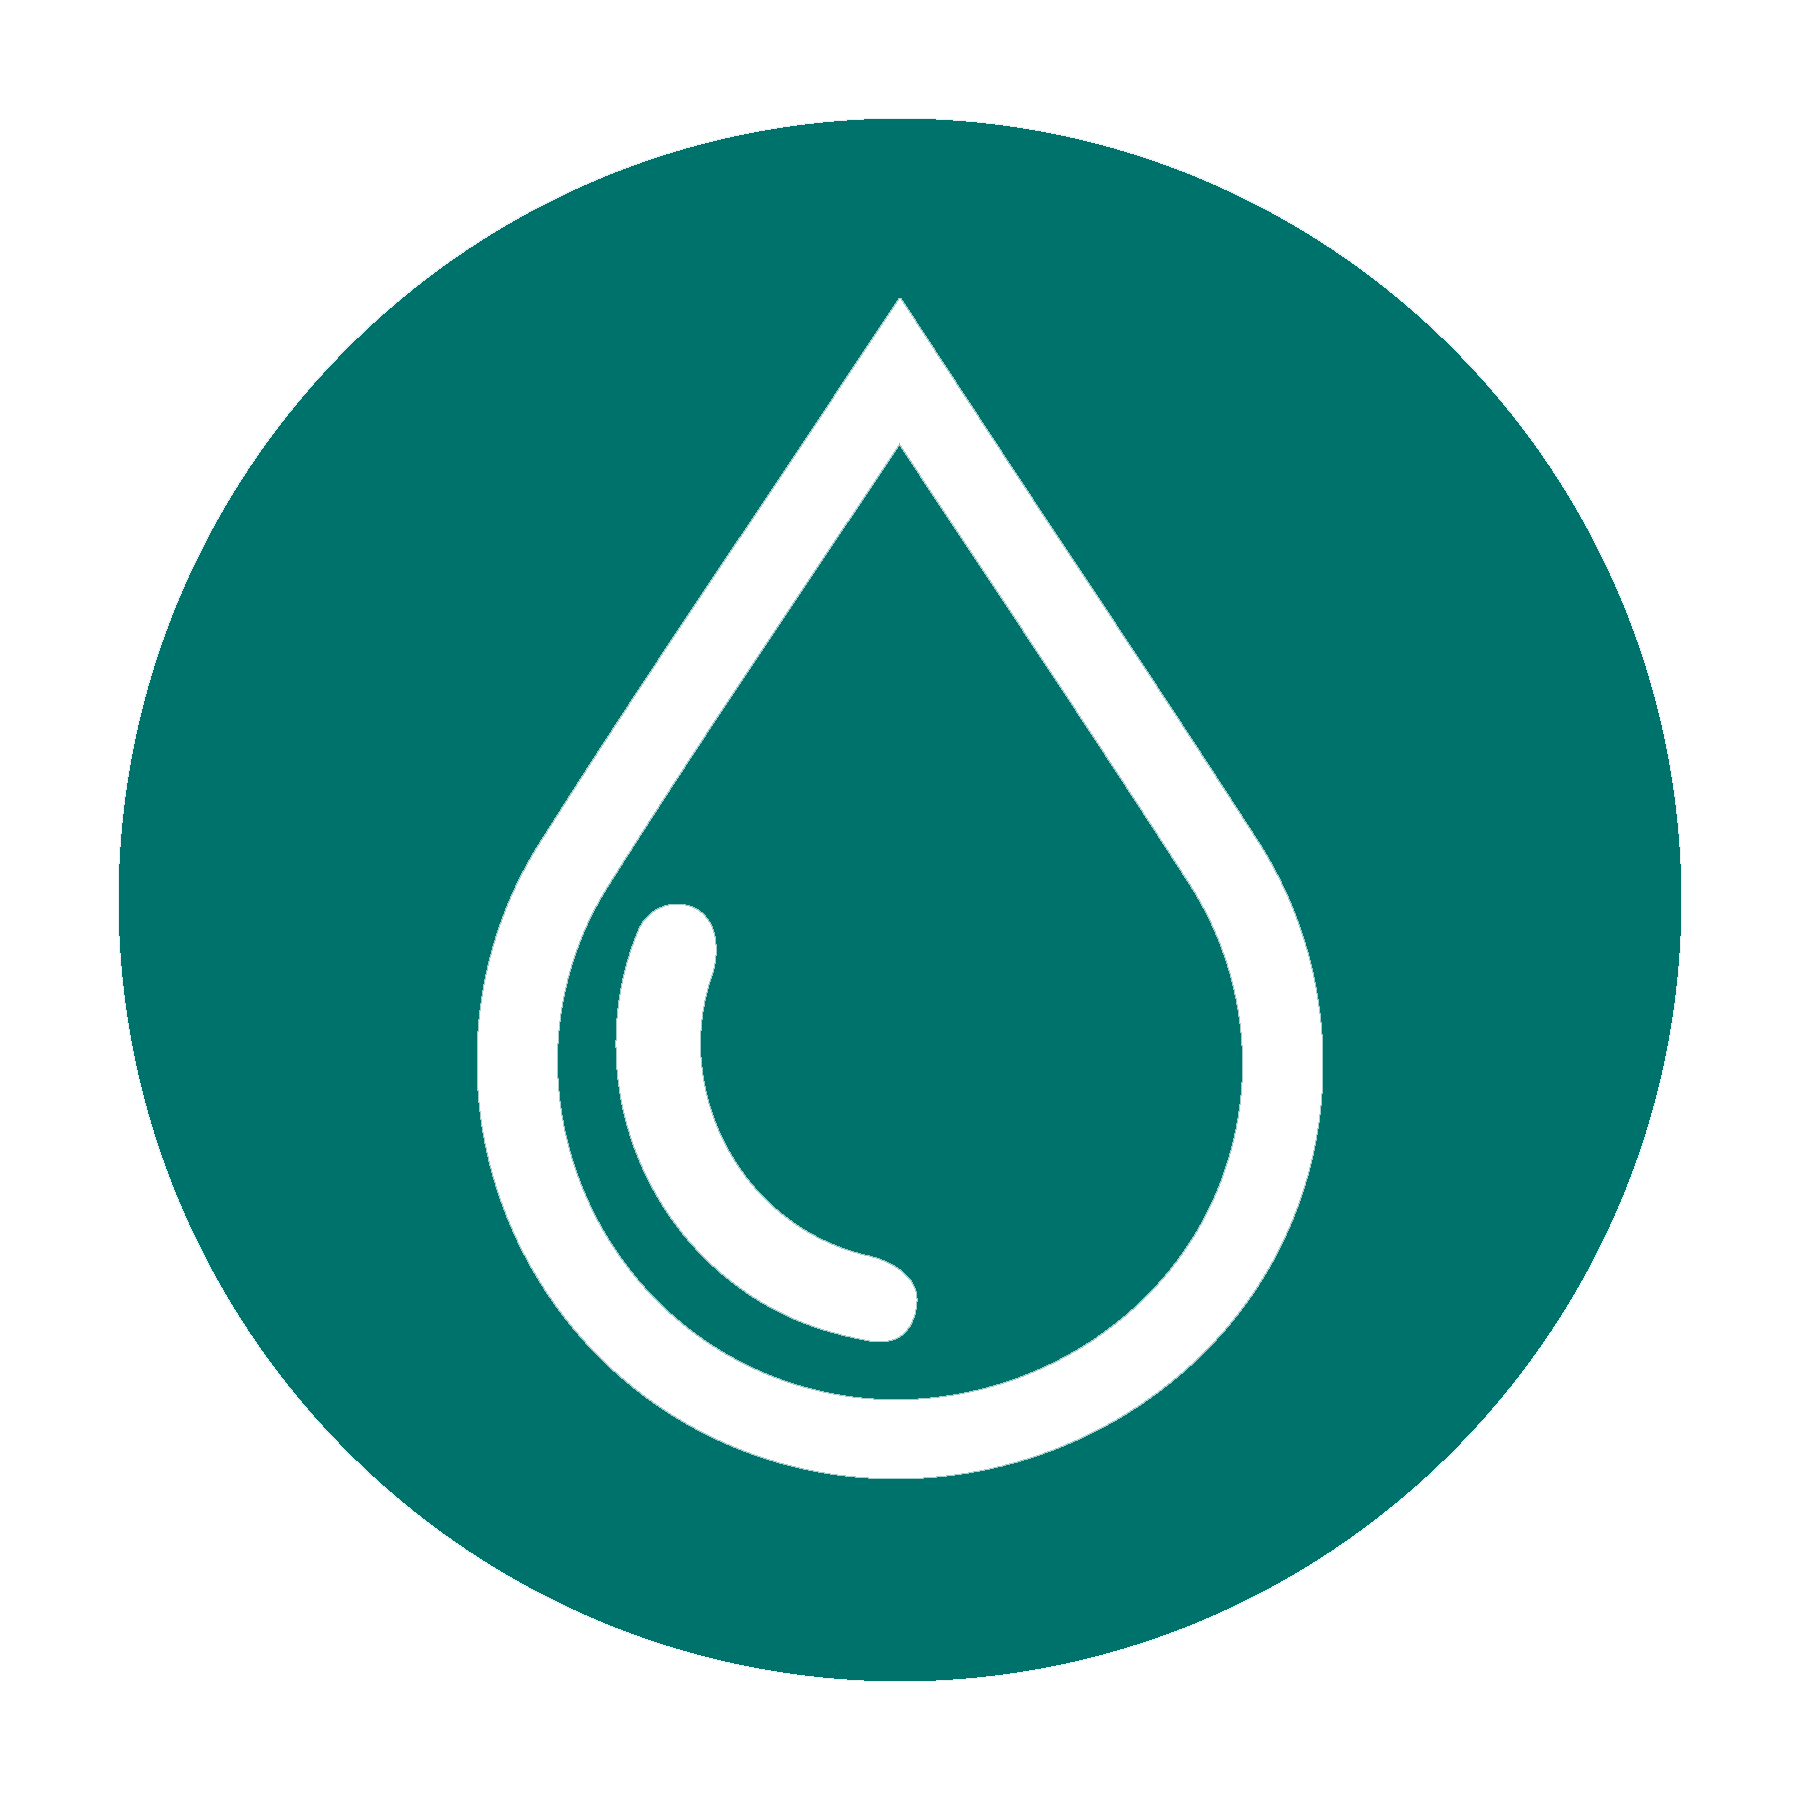 Water badge